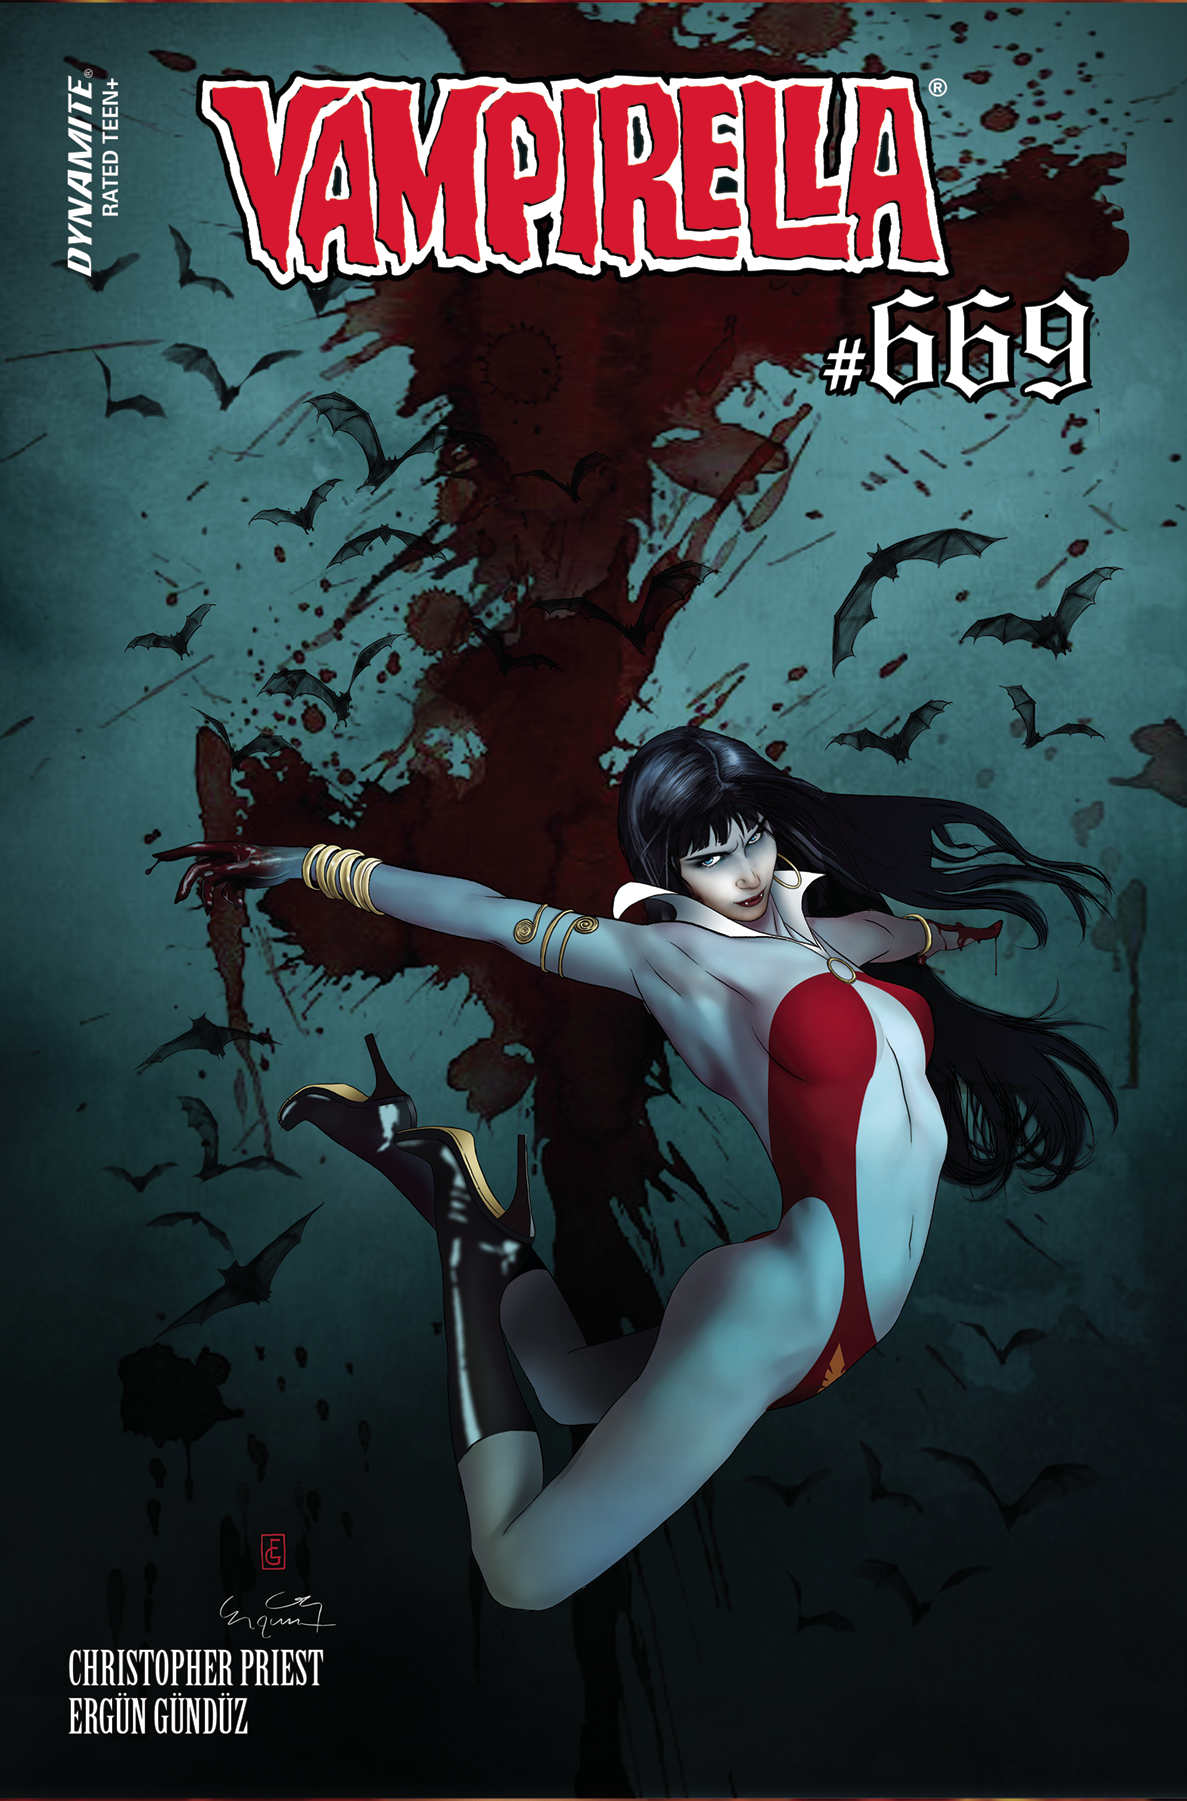 Vampirella #669 Cover F 7 Copy Incentive Gunduz Original